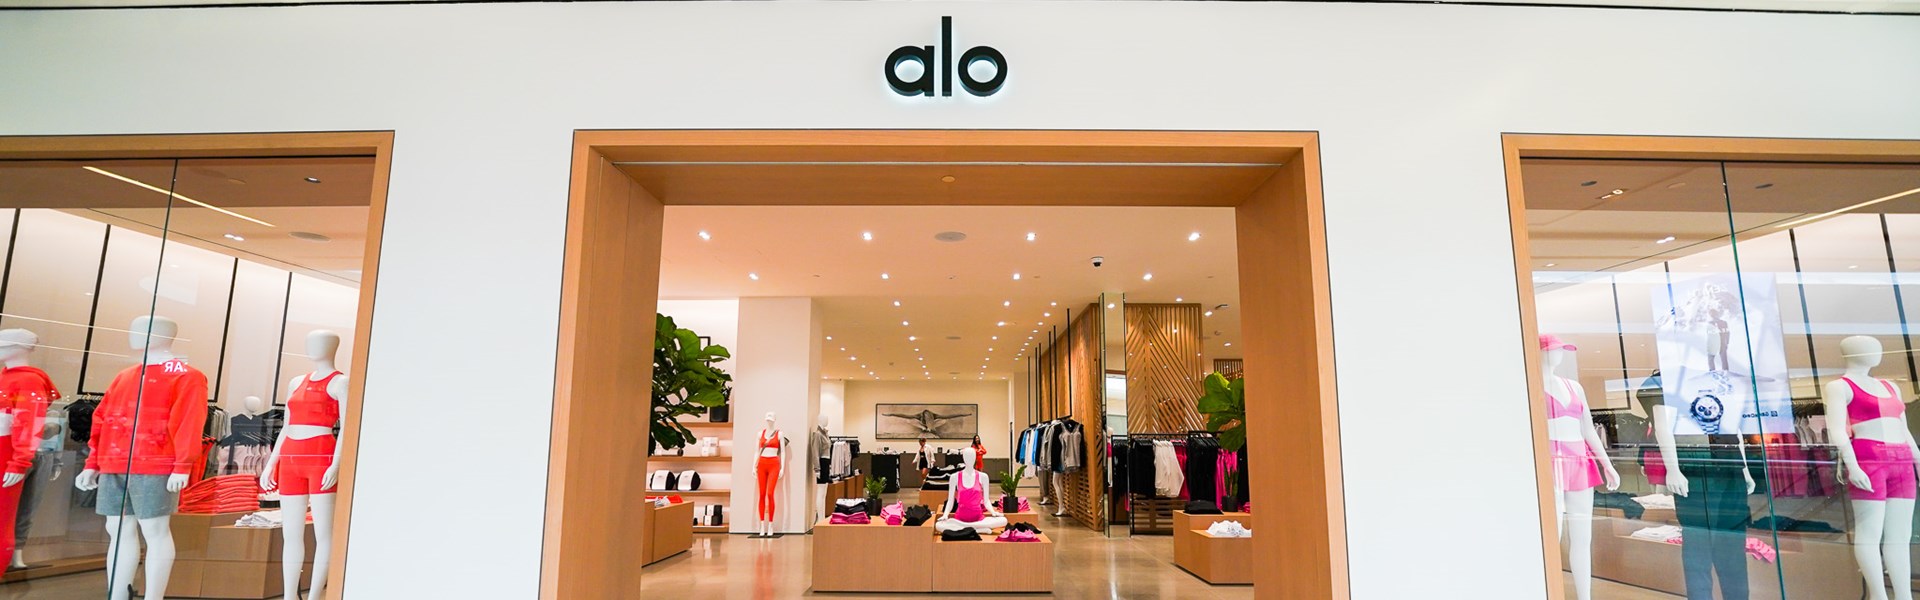 ALO Yoga Store - Clothing Store